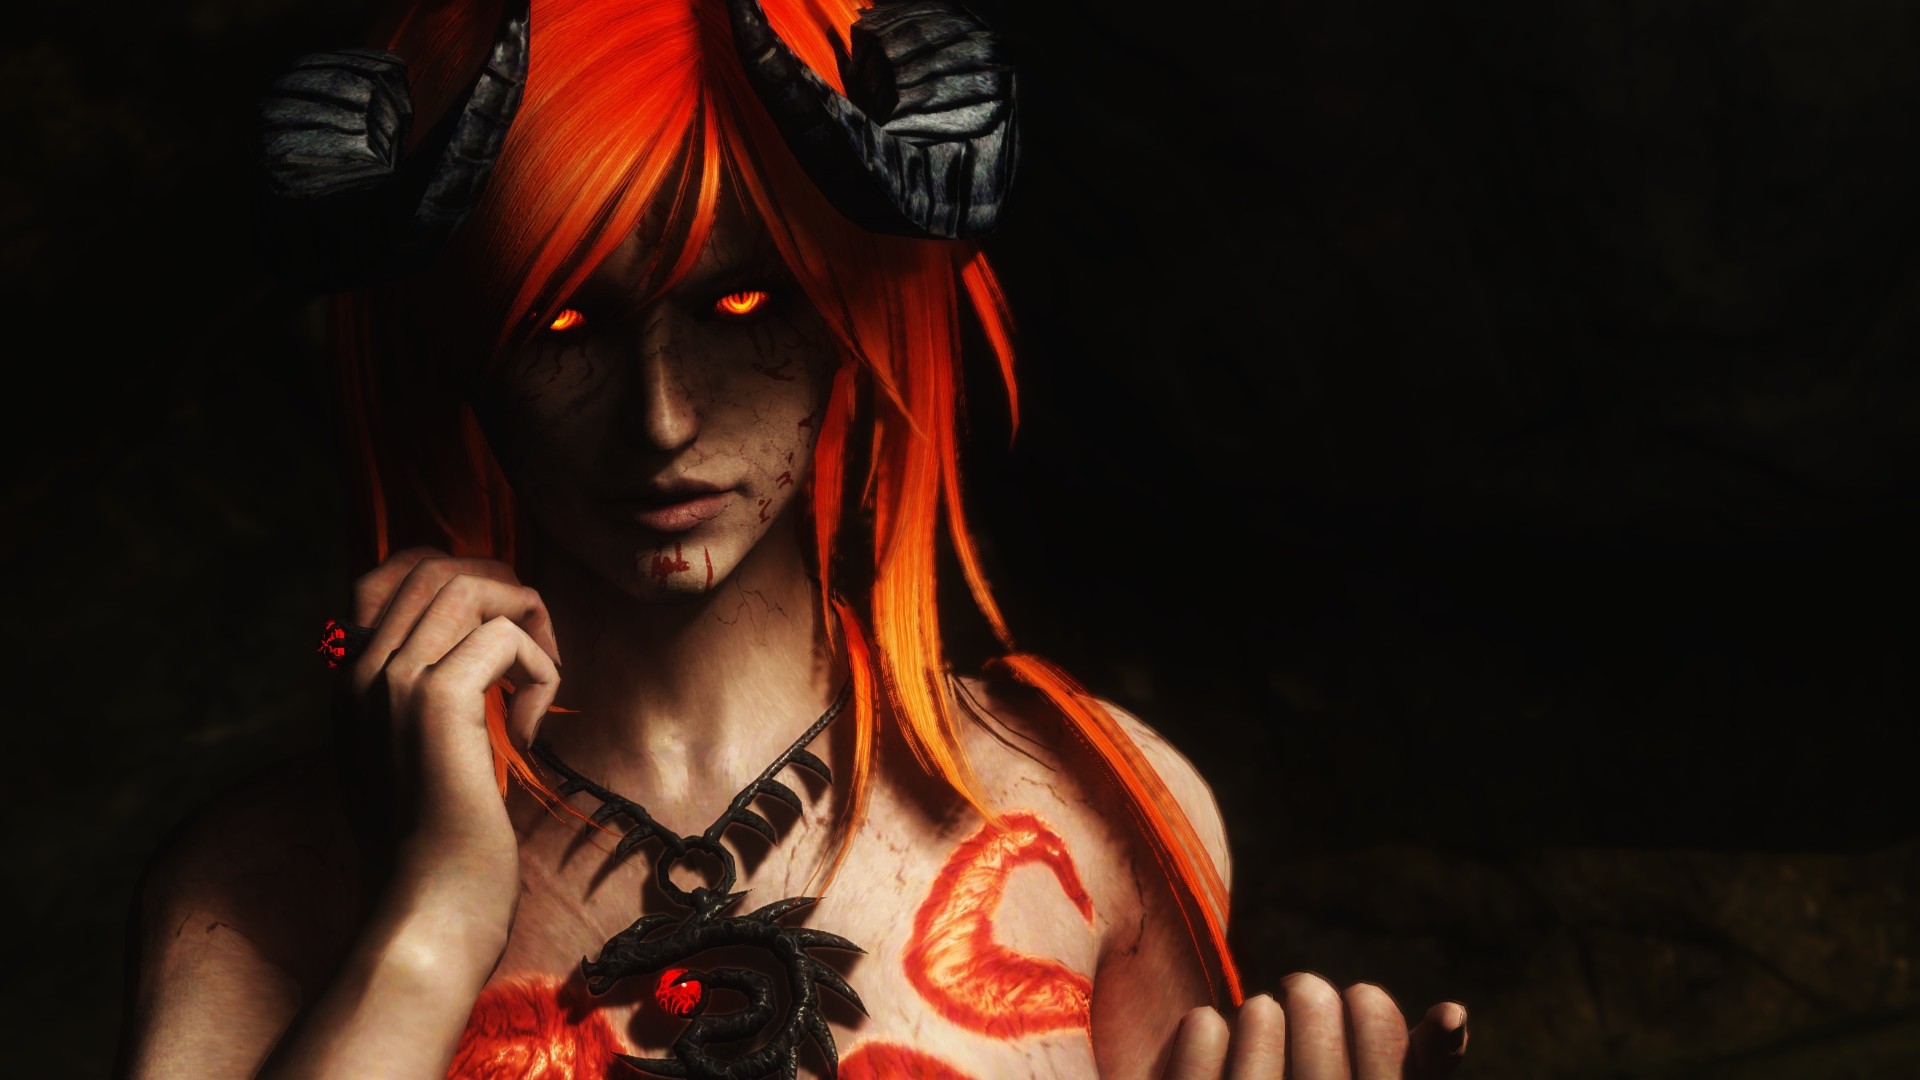 http://www.zastavki.com/pictures/originals/2015/Fantasy_Demon_girl_with_orange_hair_098938_.jpg